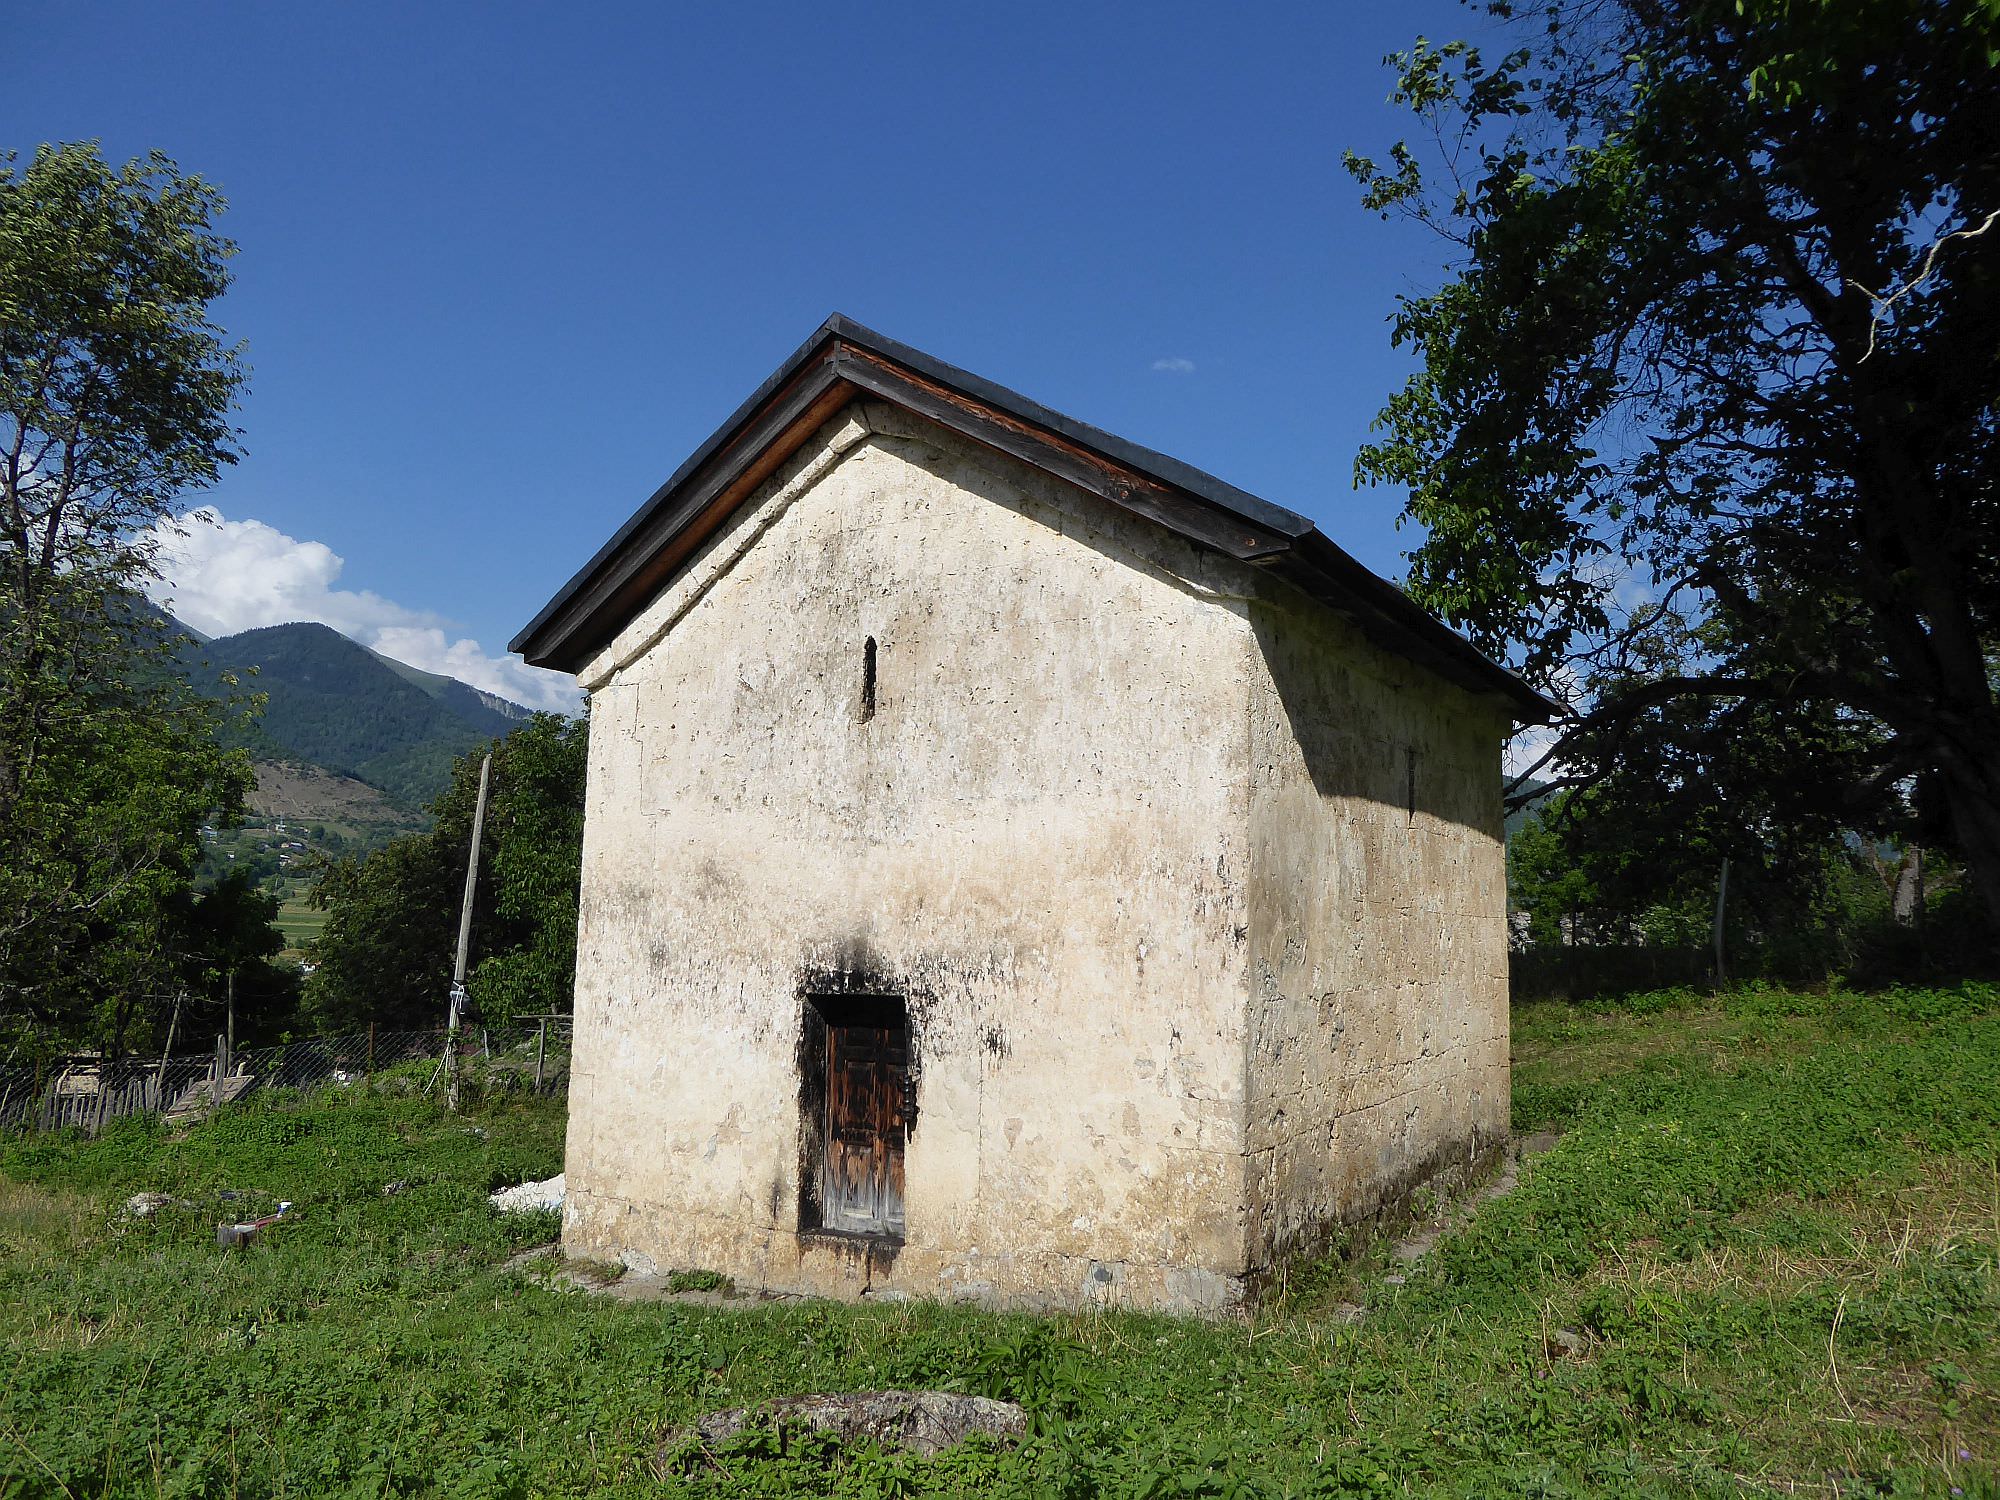 St. George's church in Lahili village